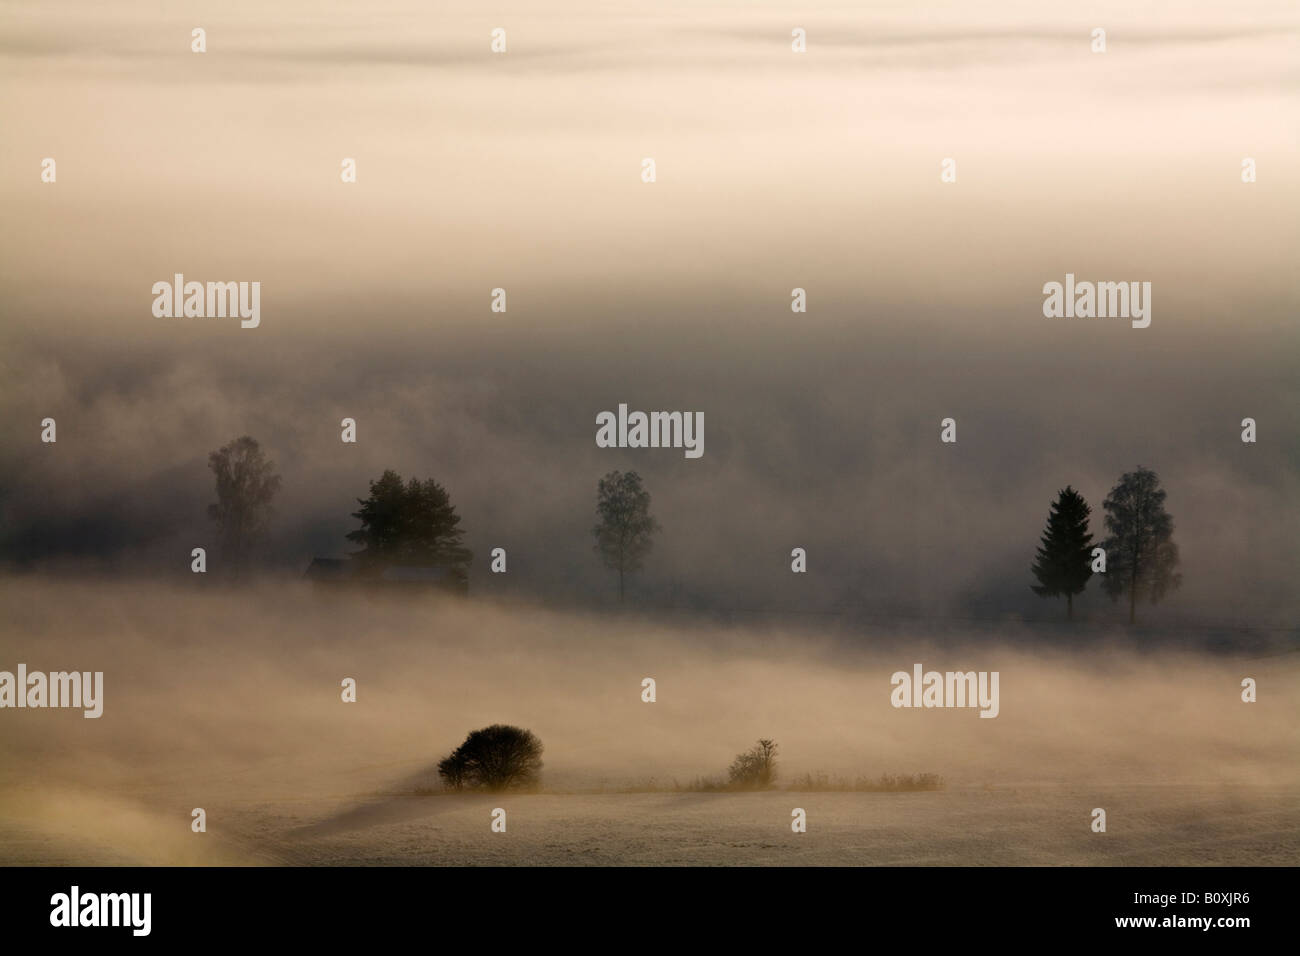 Germany, Bavaria, Murnau, Misty landscape Stock Photo